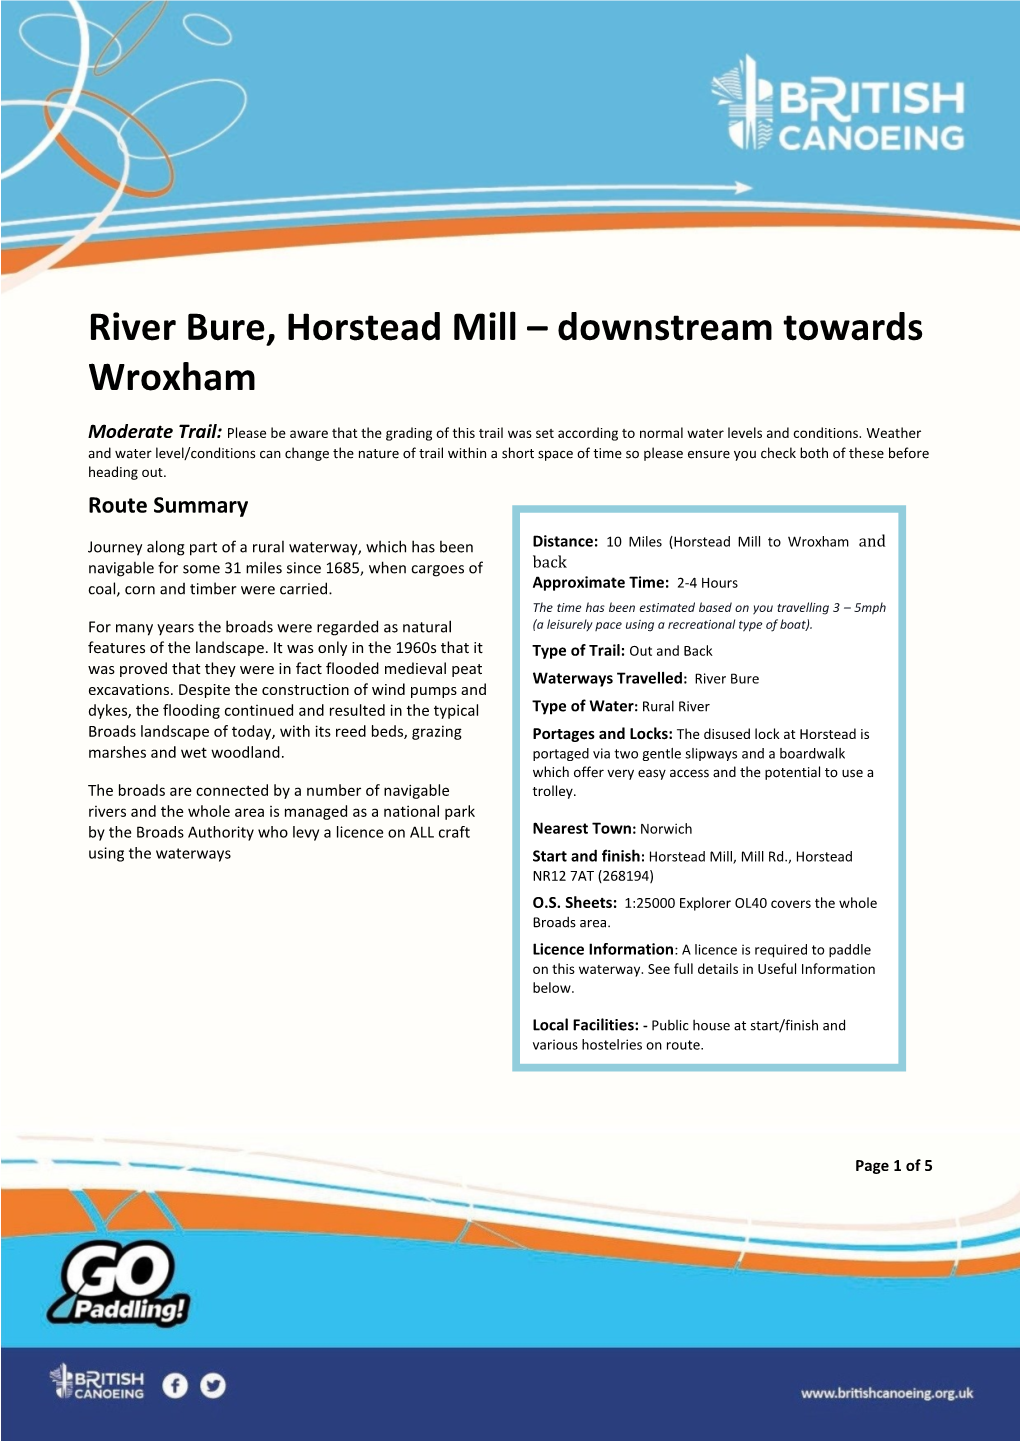 River Bure, Horstead Mill – Downstream Towards Wroxham